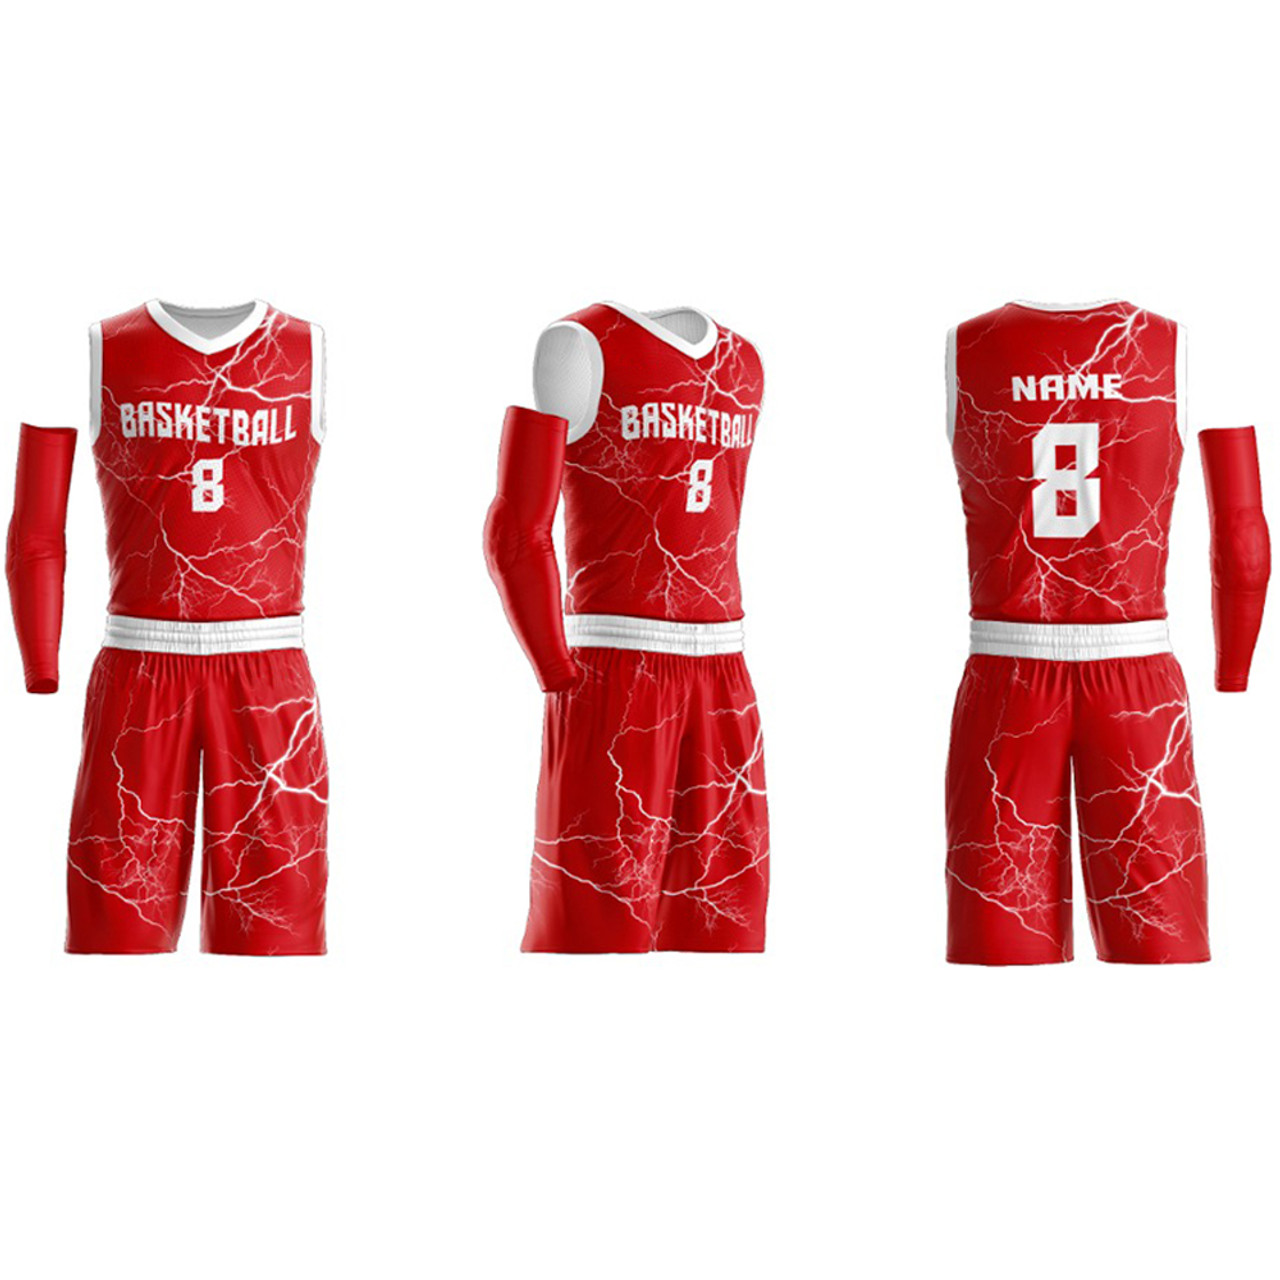 CANOTTI Wholesale Basketball Uniform Men Basketball Uniforms Jersey Adult Ports Vest Basketball Uniform Youth Basketball uniforms,1 Set